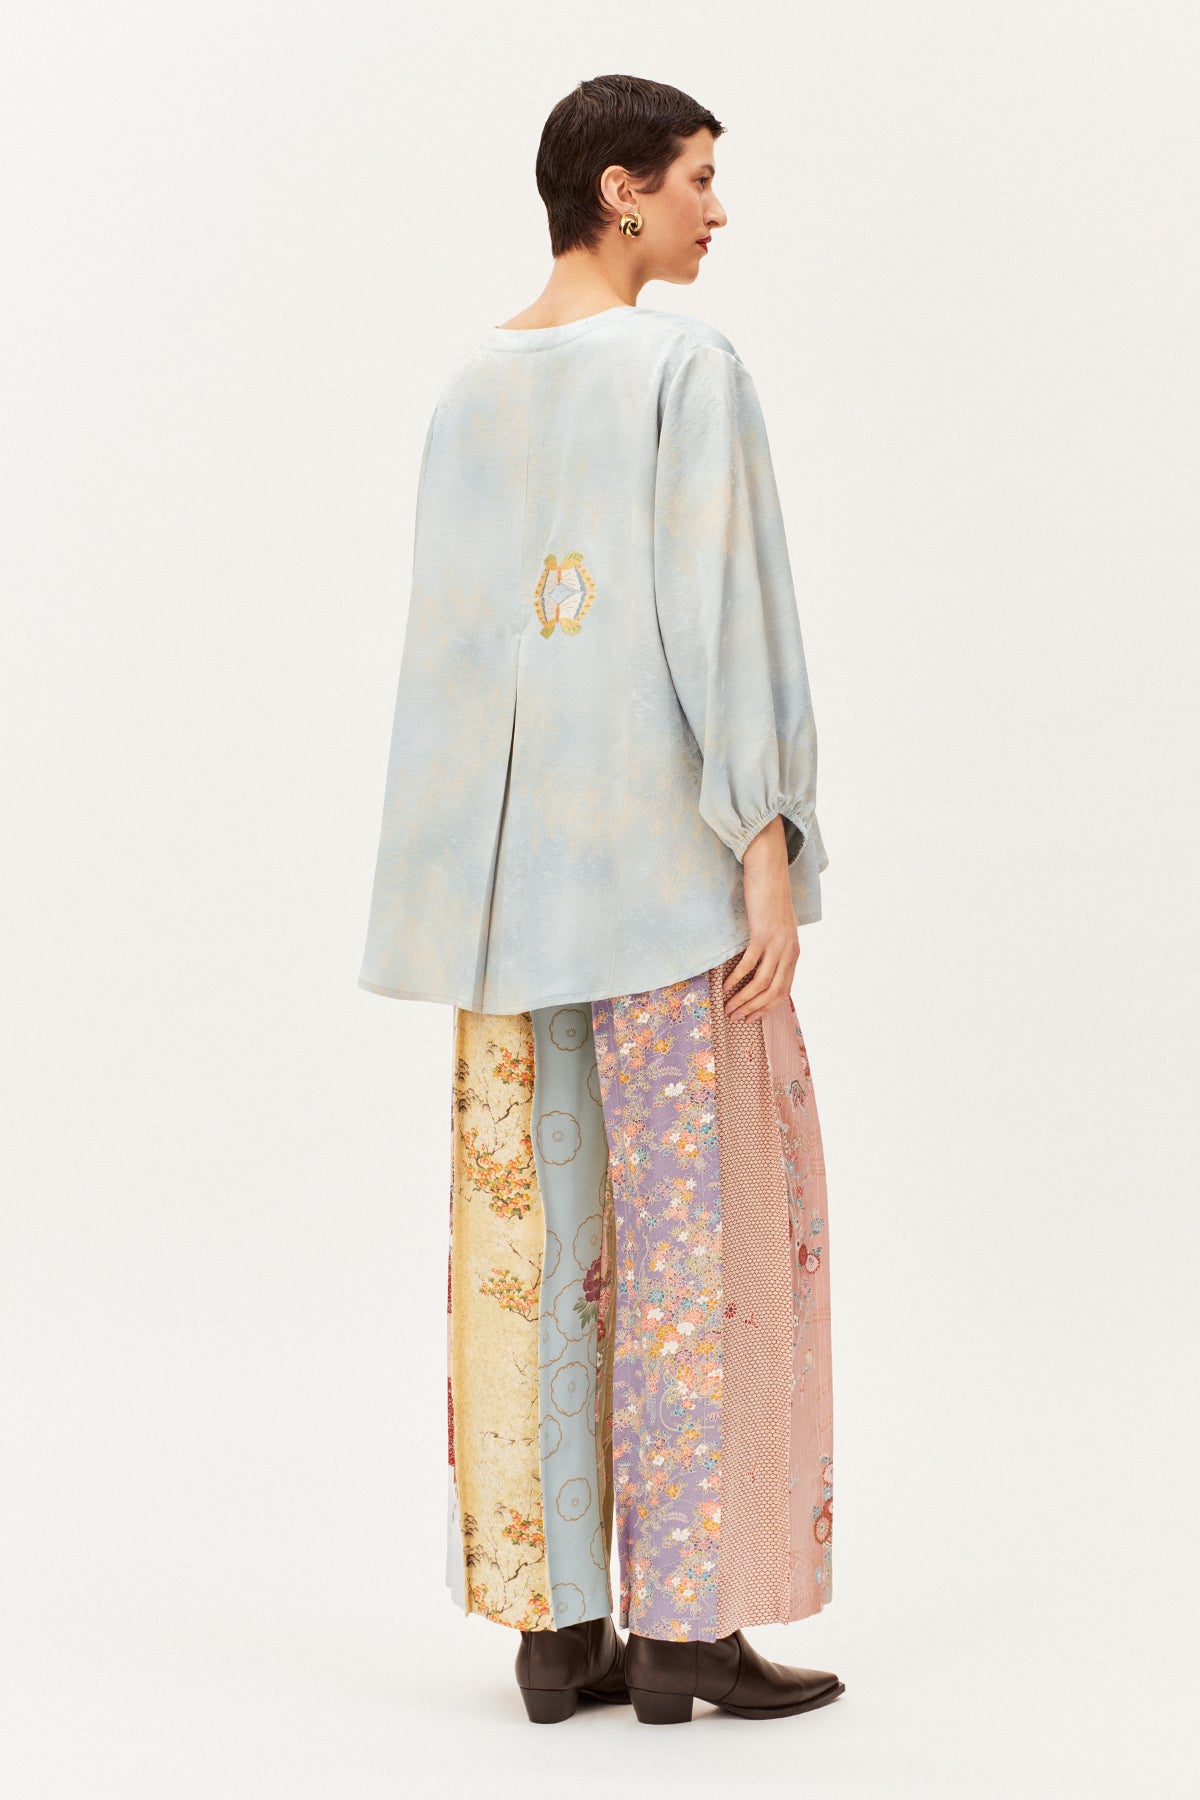 One-of-a-kind Vintage Kimono Wide Blouse